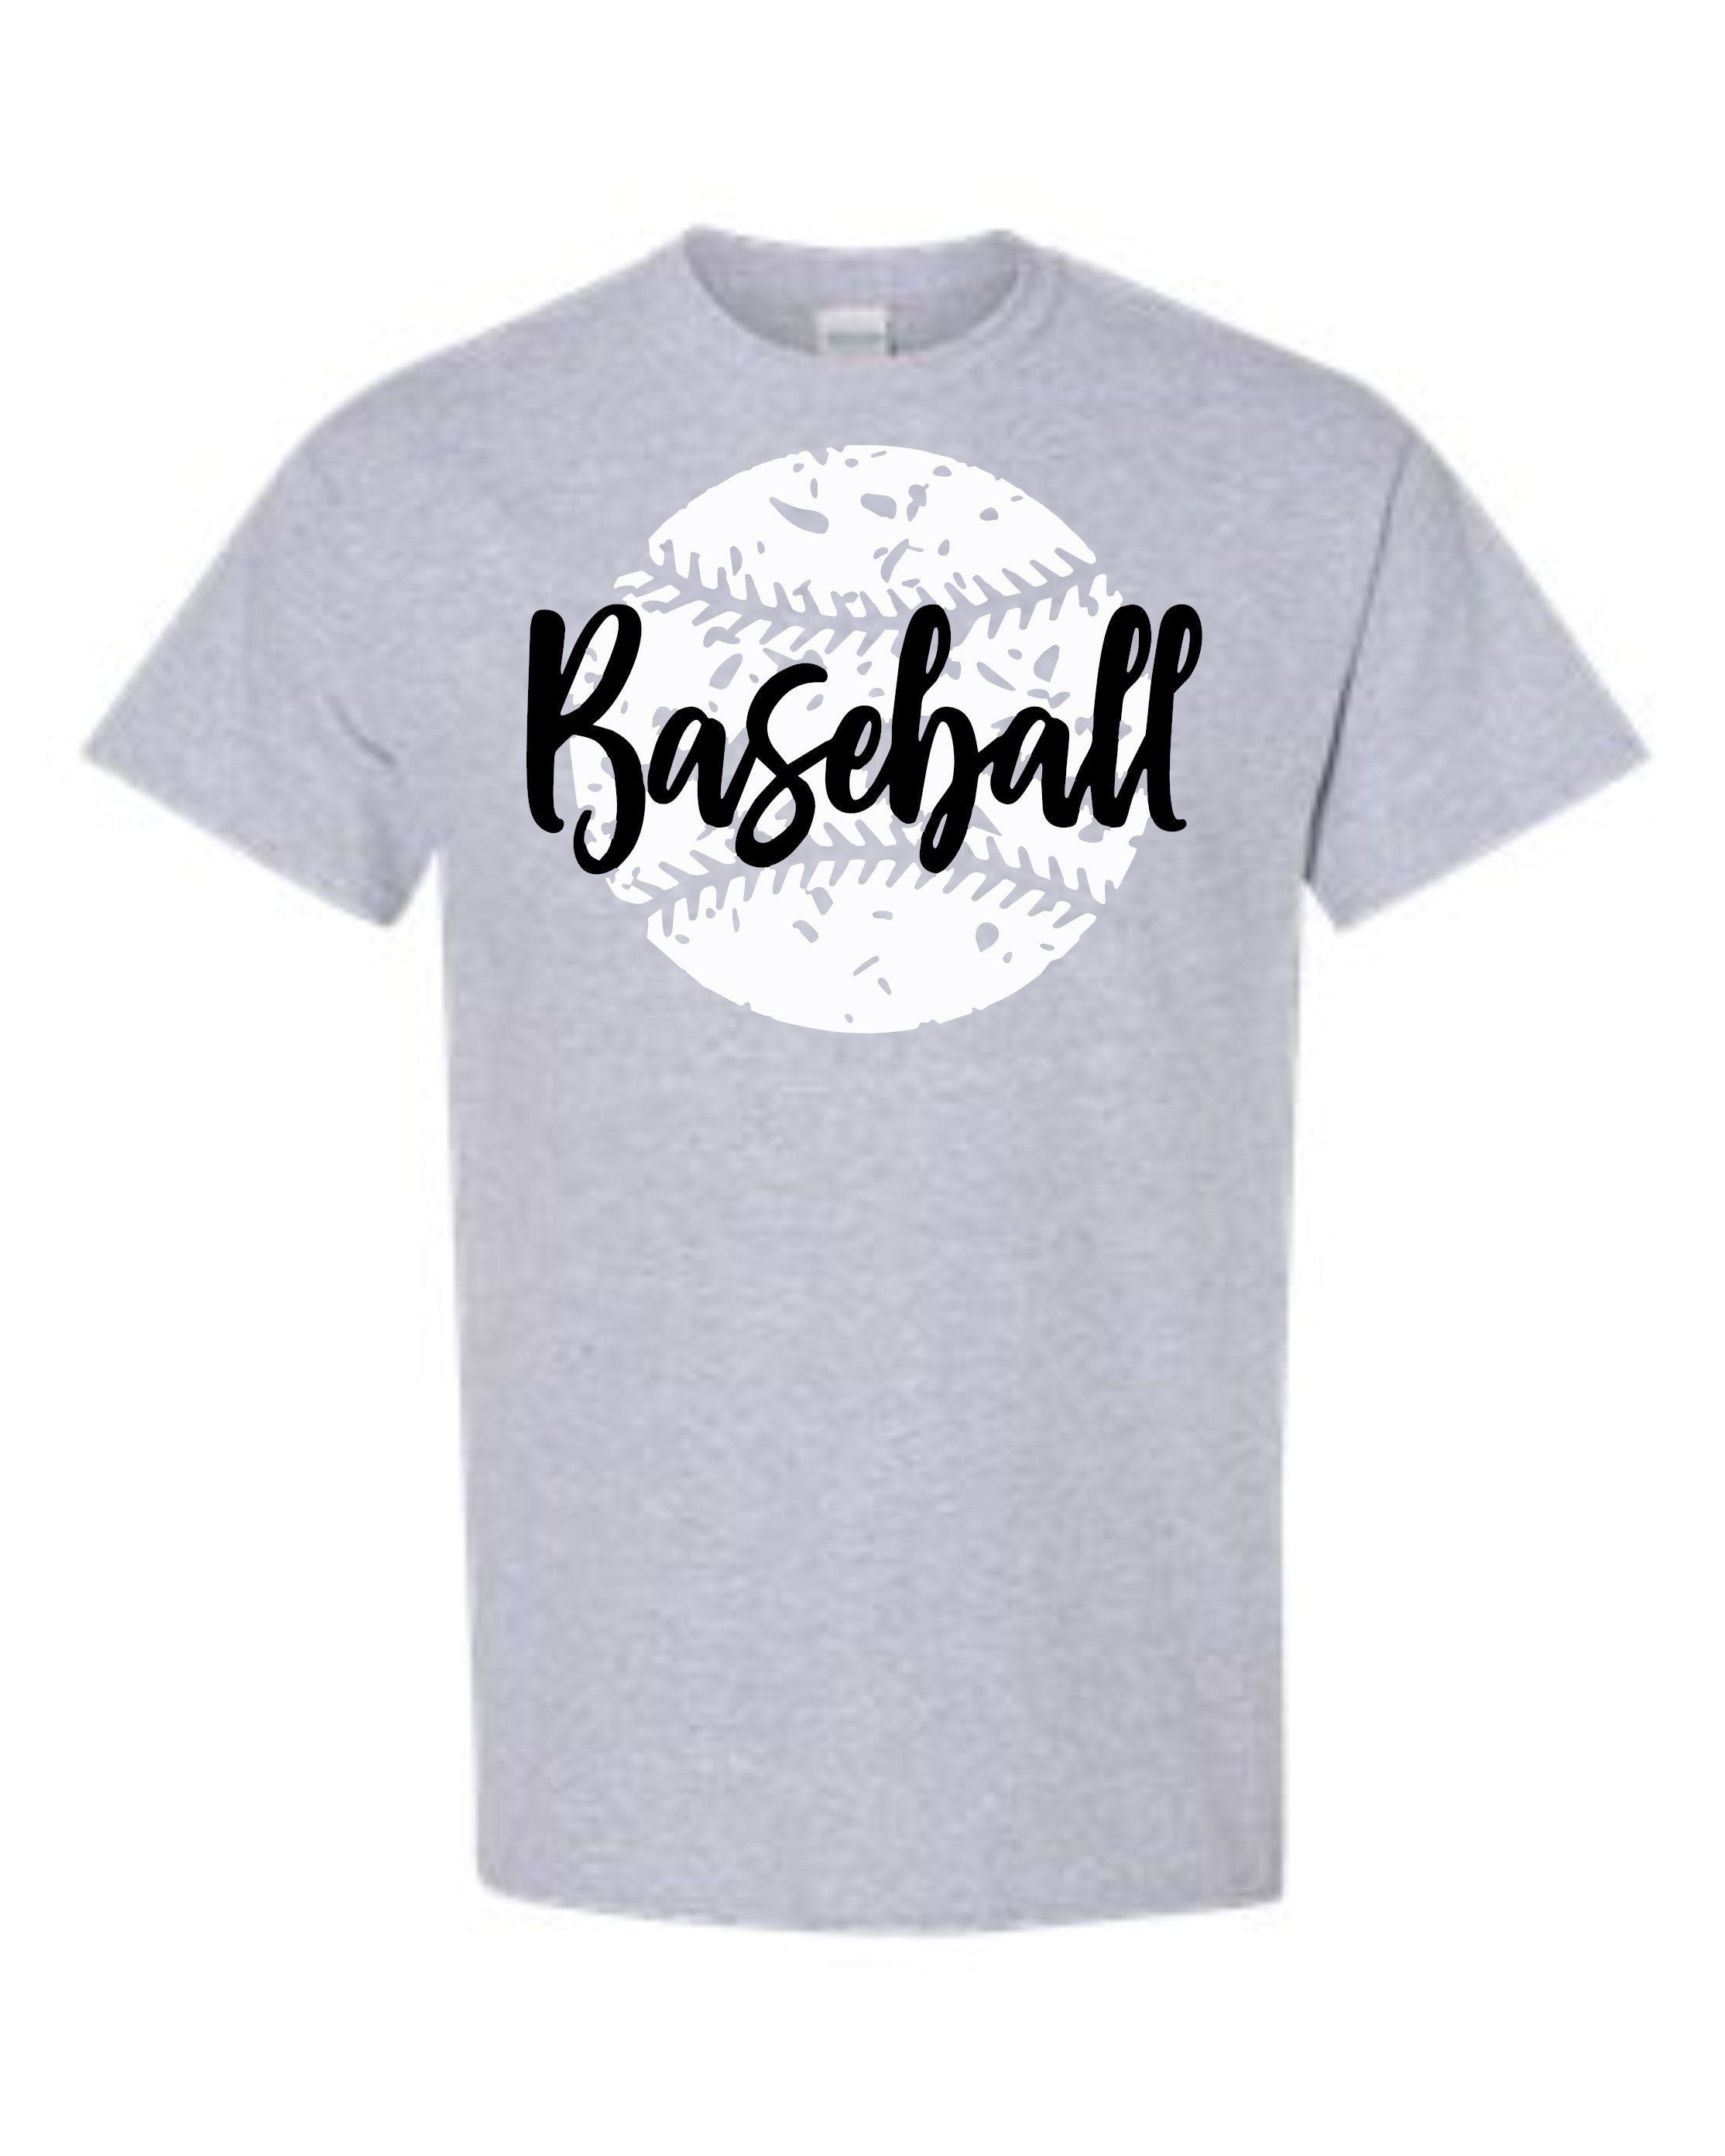 Baseball short sleeve t-shirt